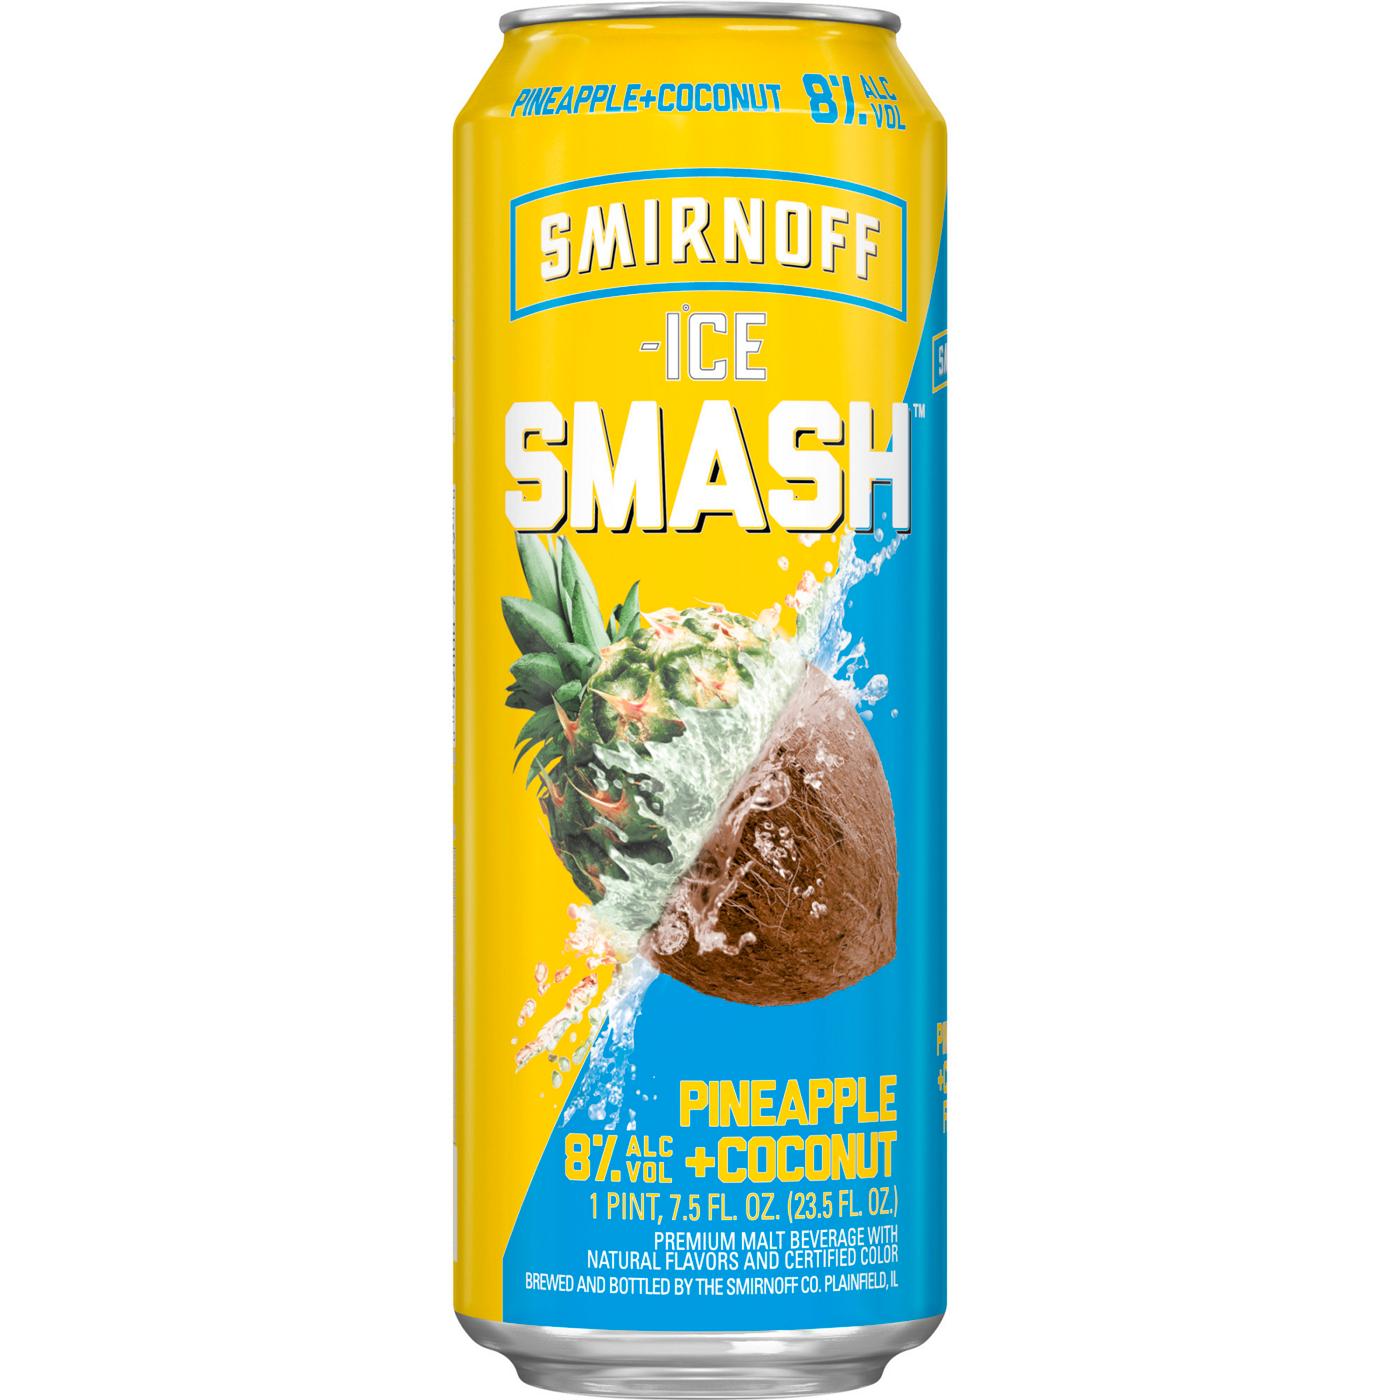 Smirnoff Ice Smash Pineapple And Coconut; image 1 of 2